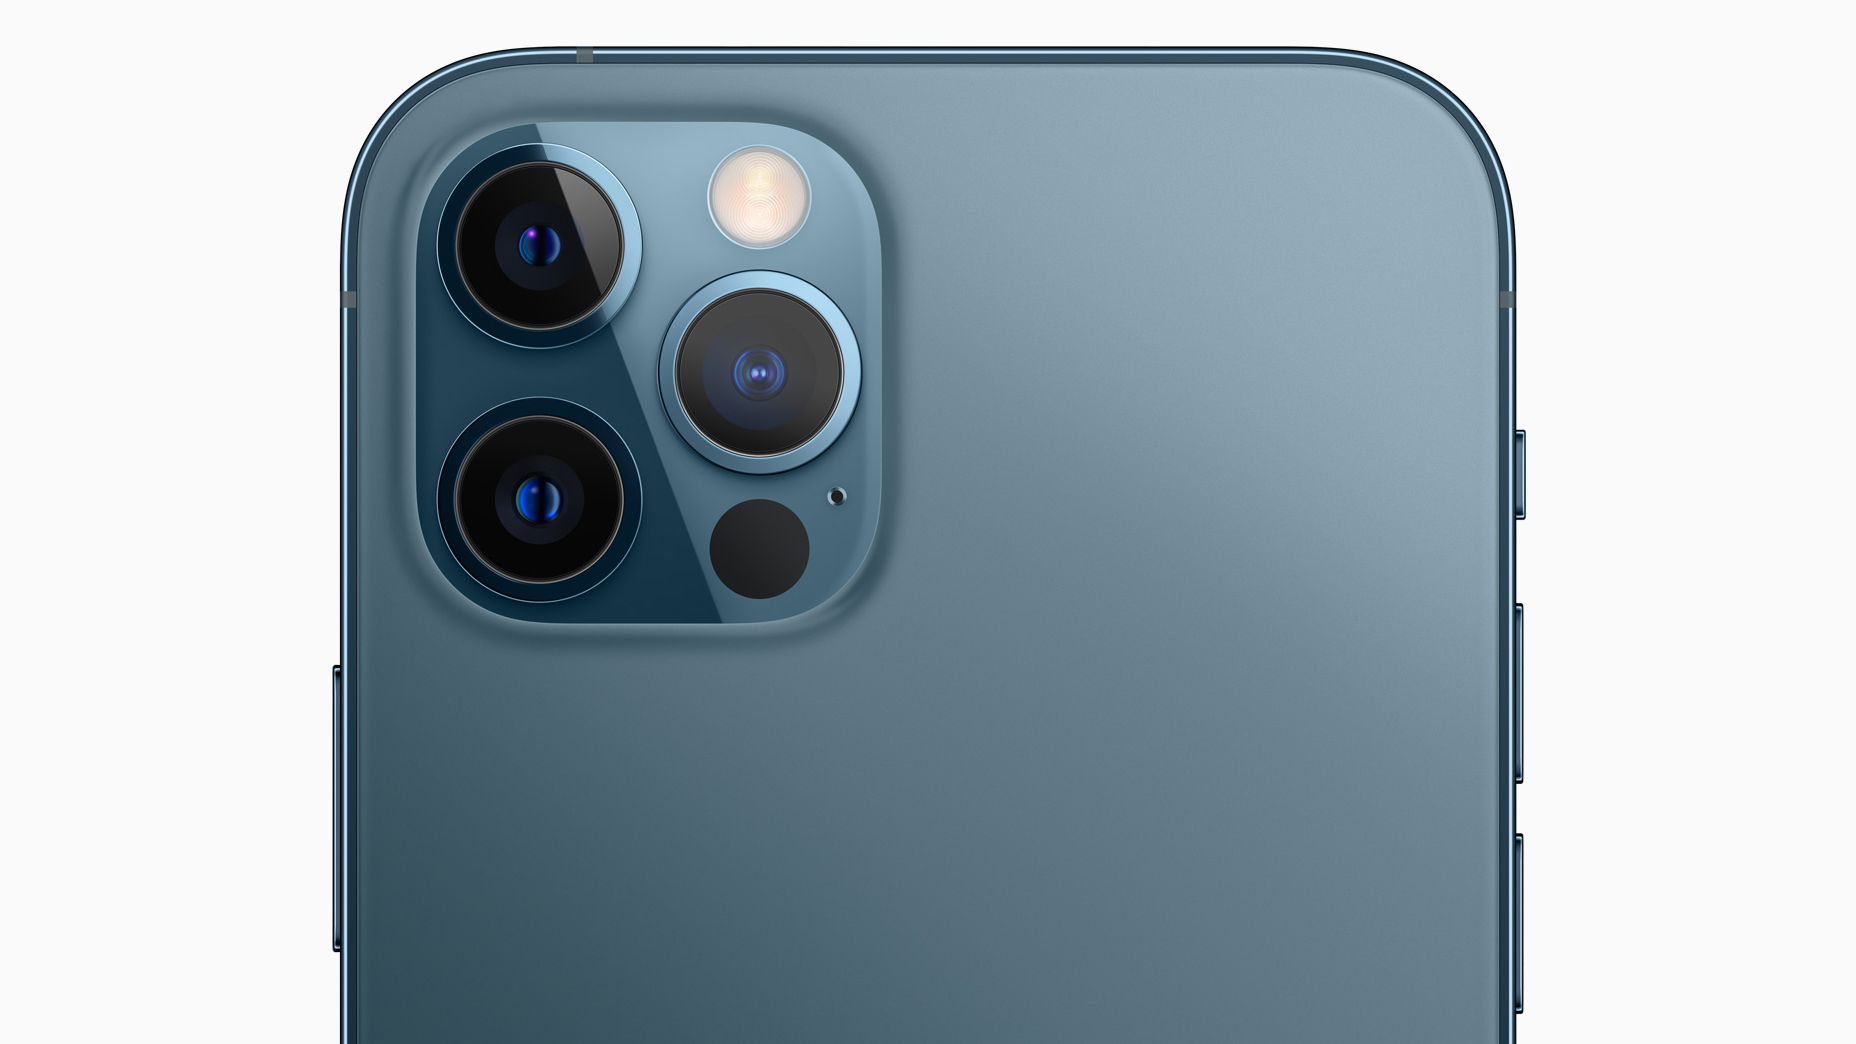 iPhone 12 Pro cameras 